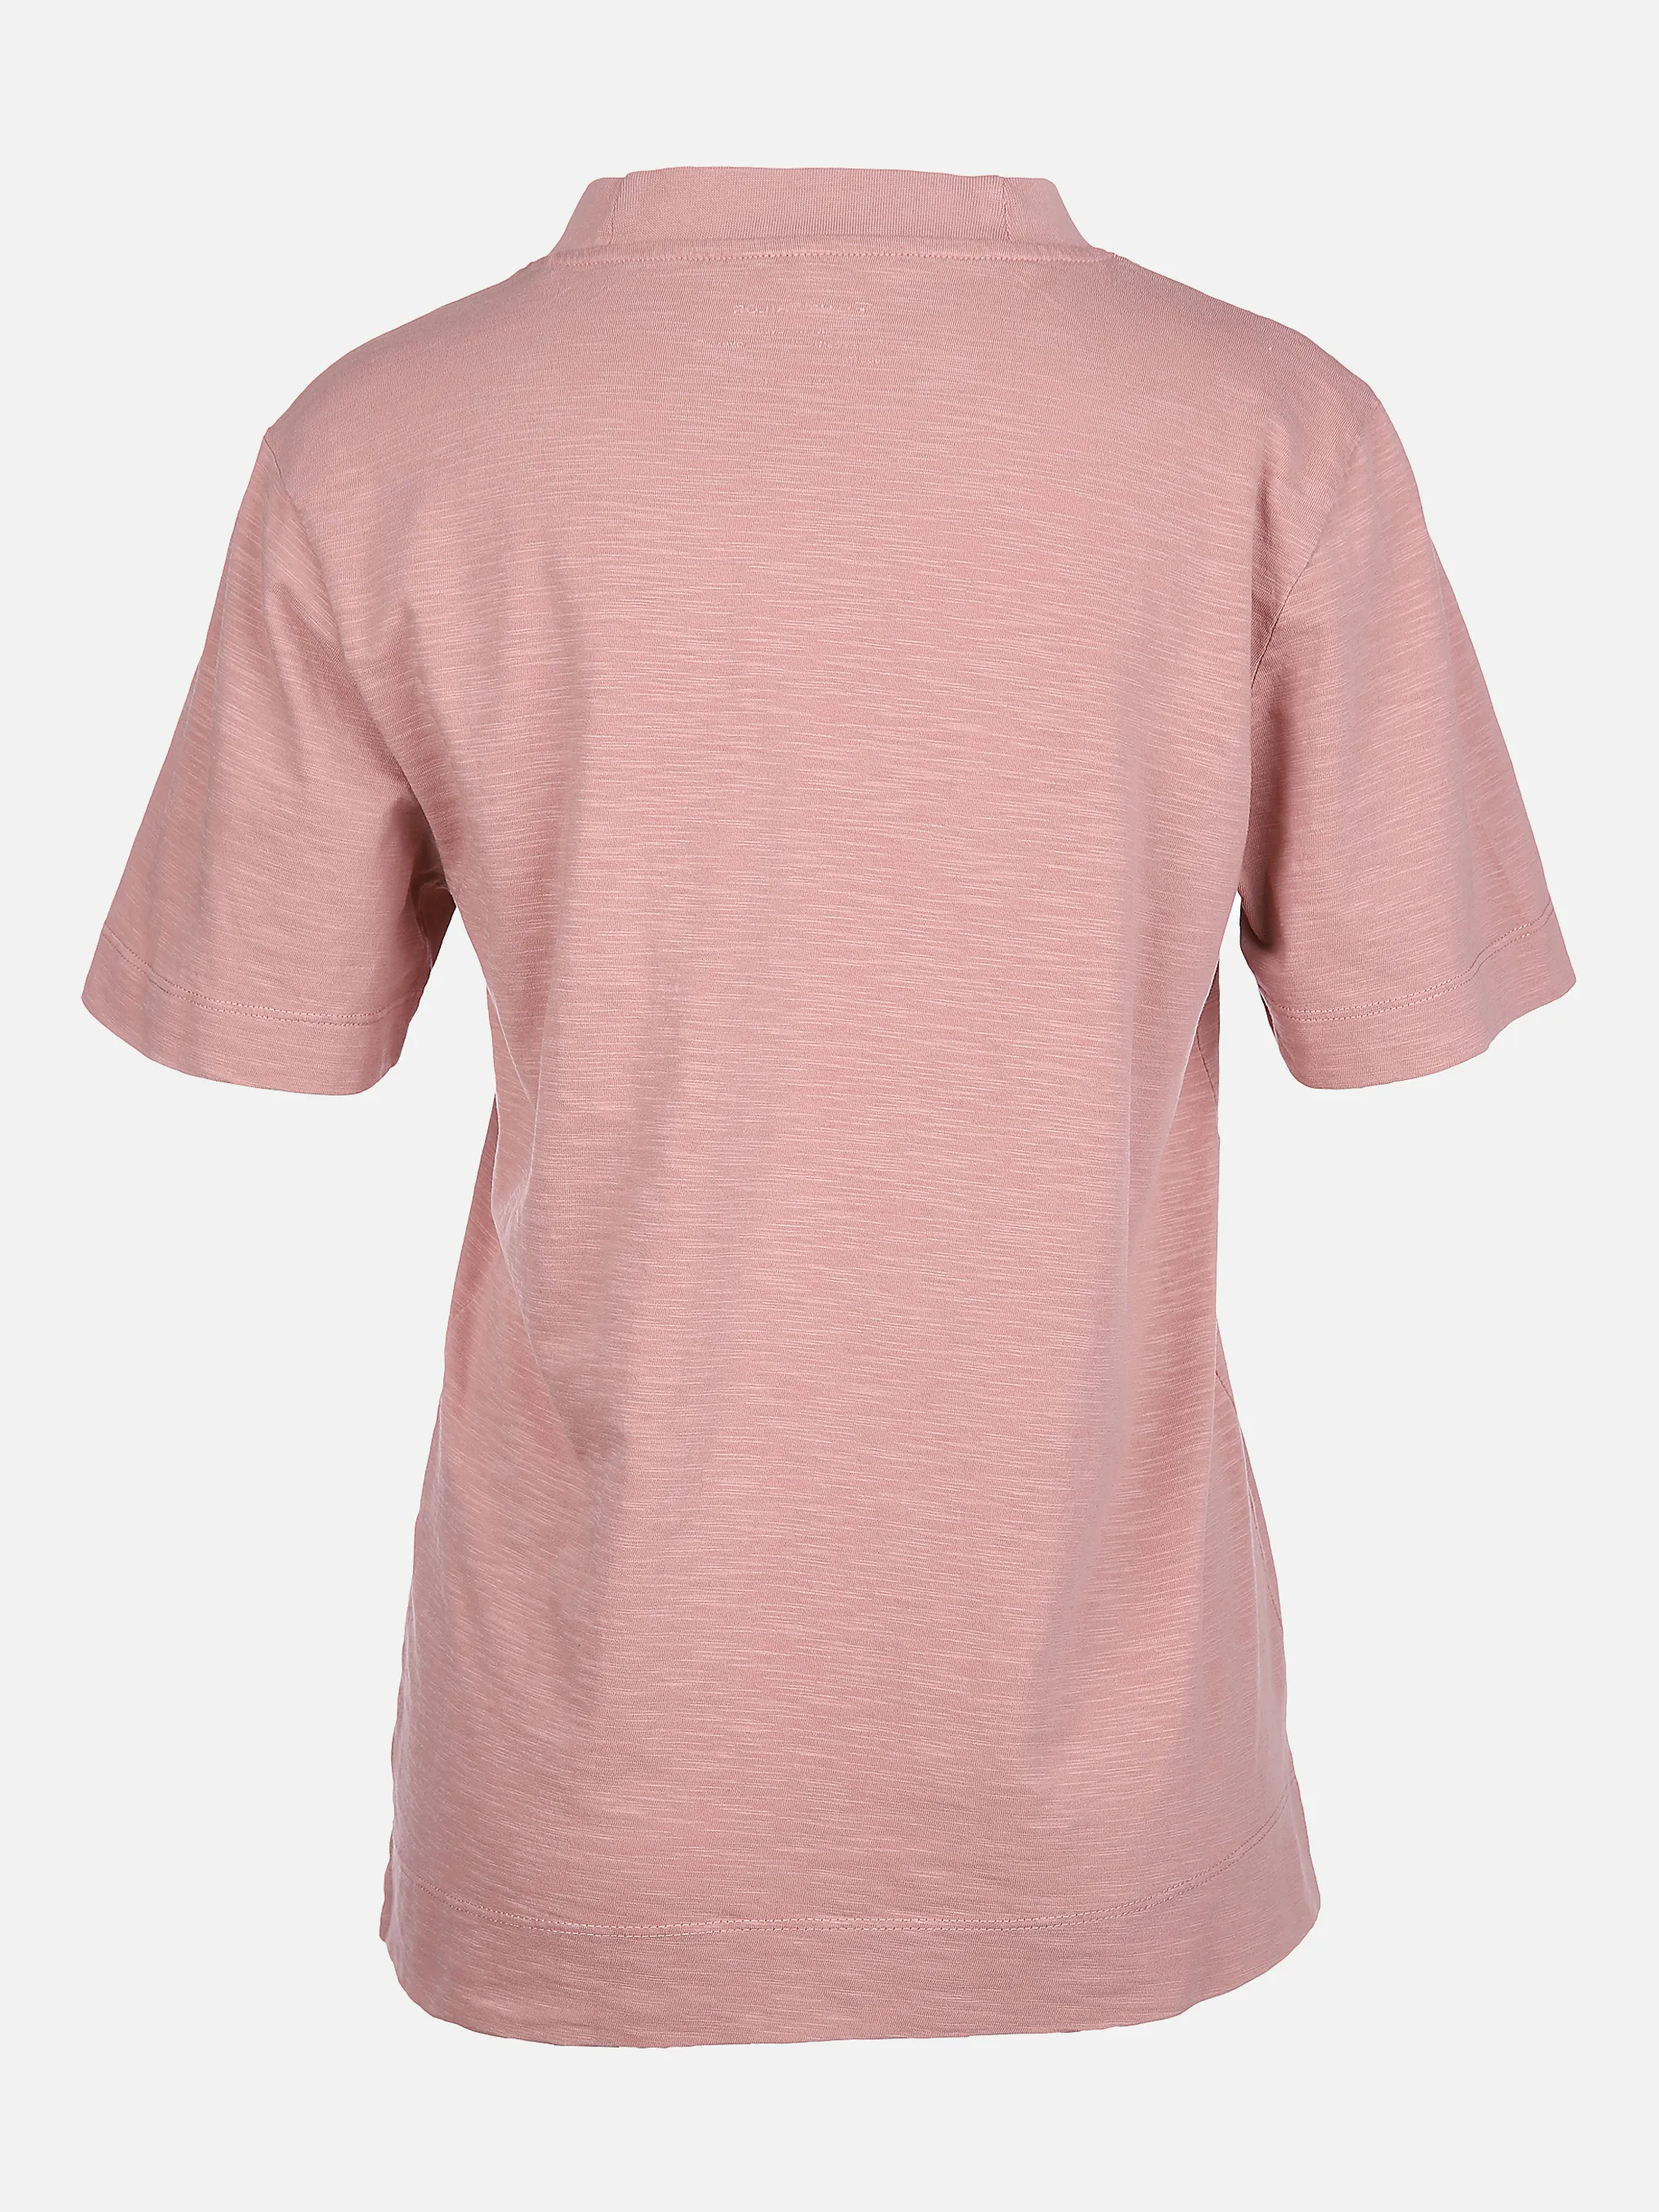 Tom Tailor 1031213 t-shirt natural dye Rosa 865218 29515 2